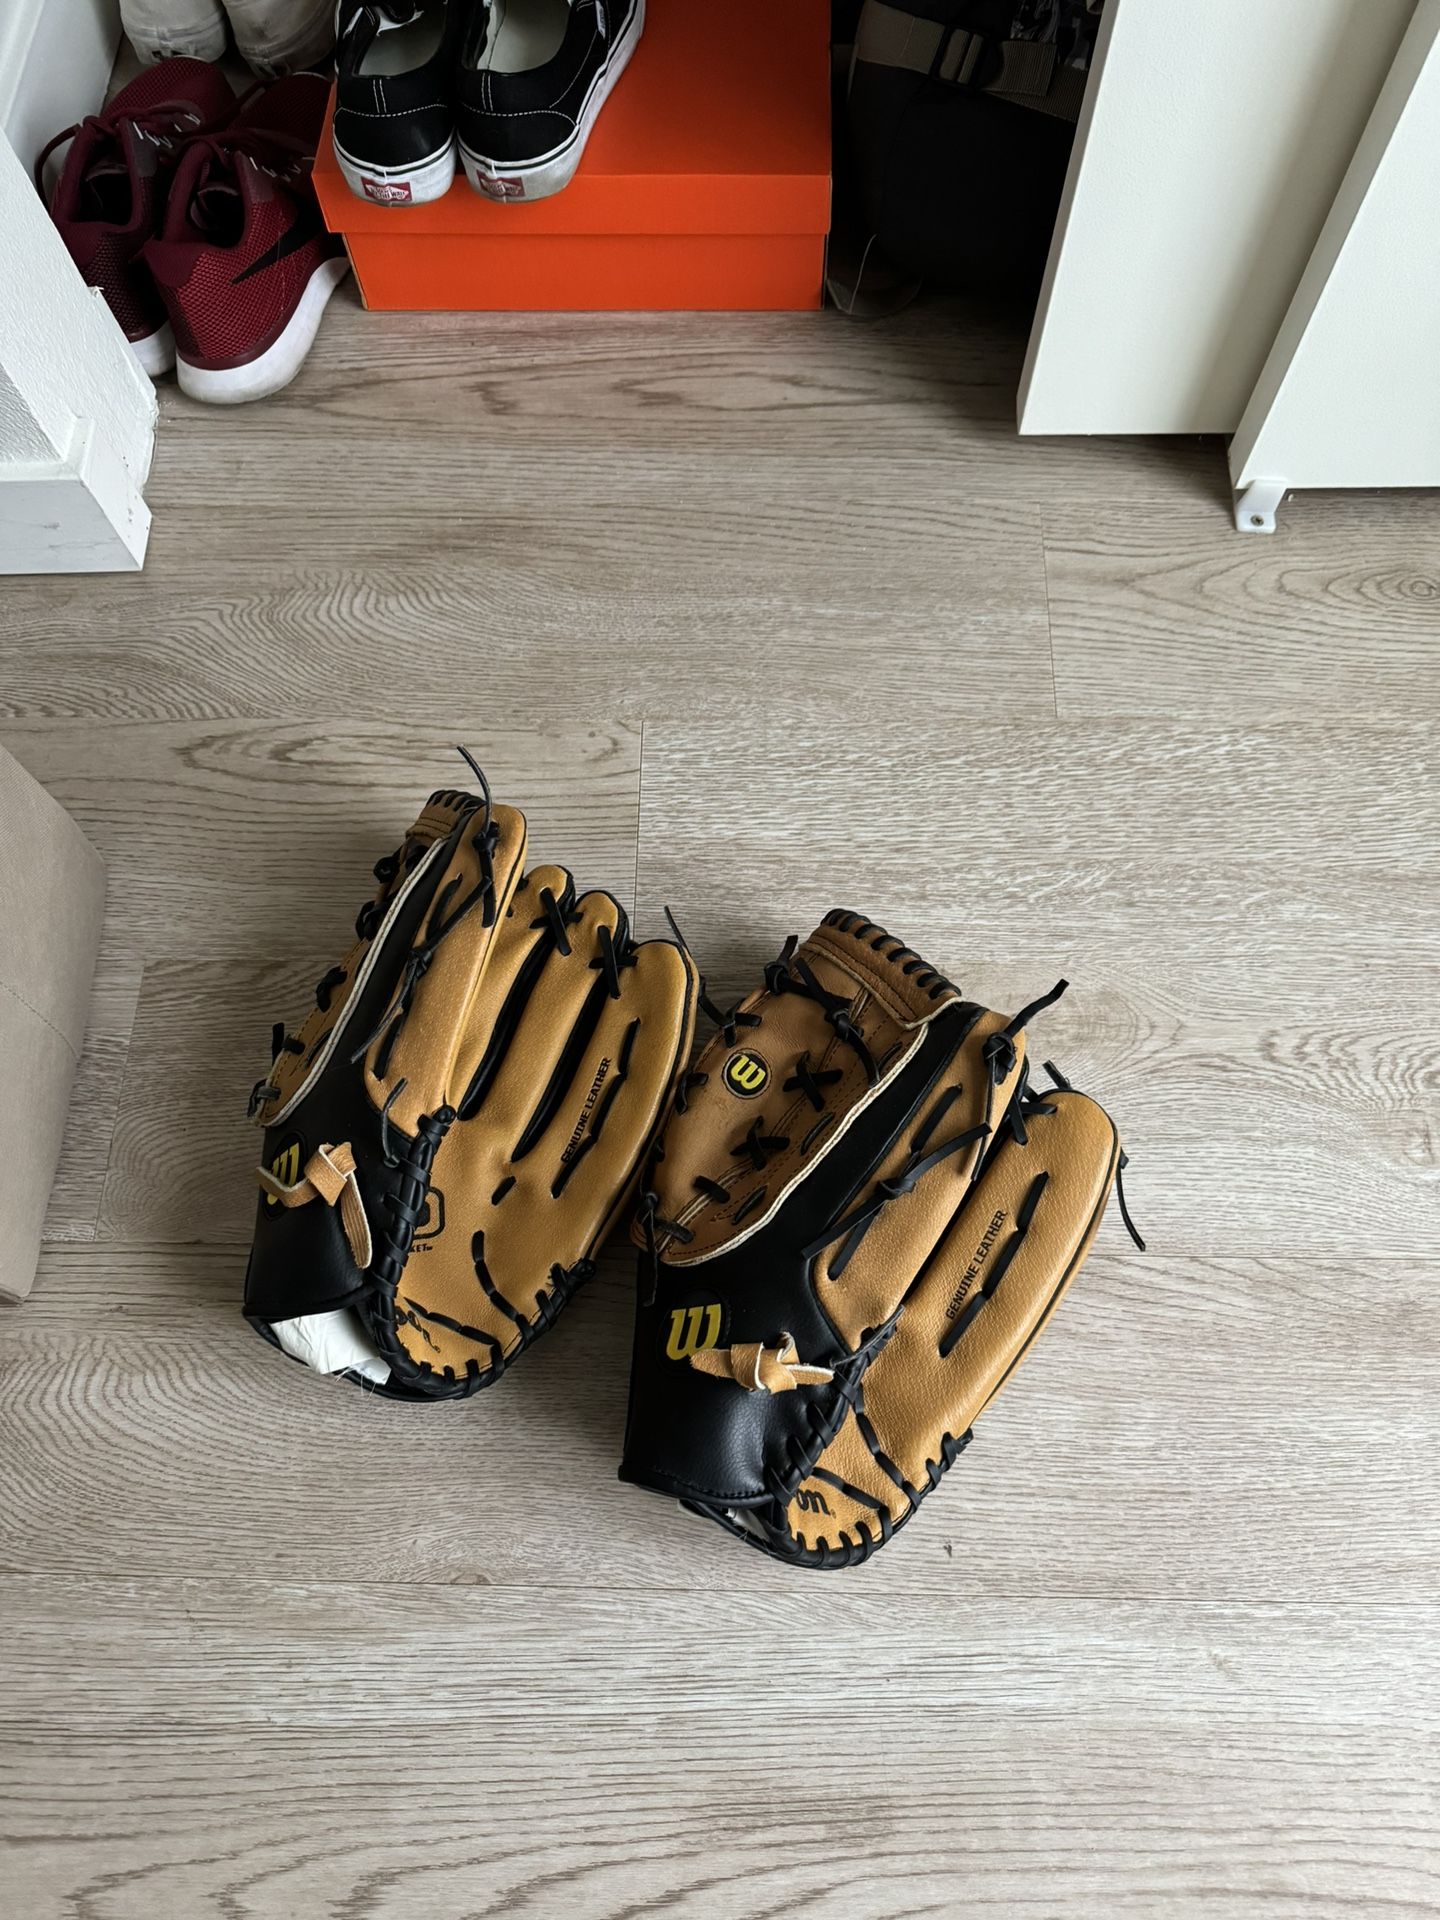 Wilson 14" softball gloves